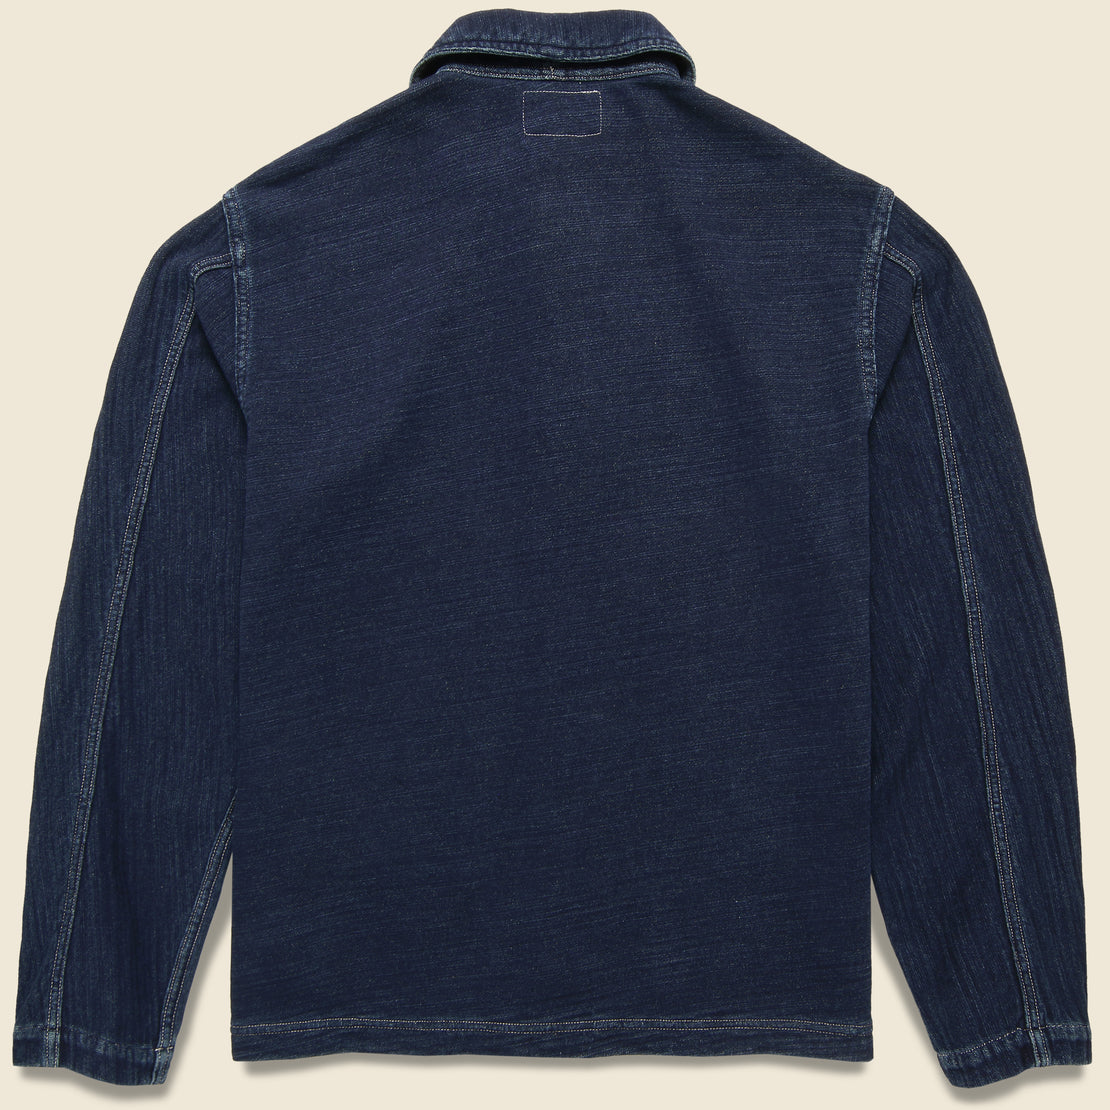 Dungaree Cardigan - Indigo - RRL - STAG Provisions - Tops - Fleece / Sweatshirt